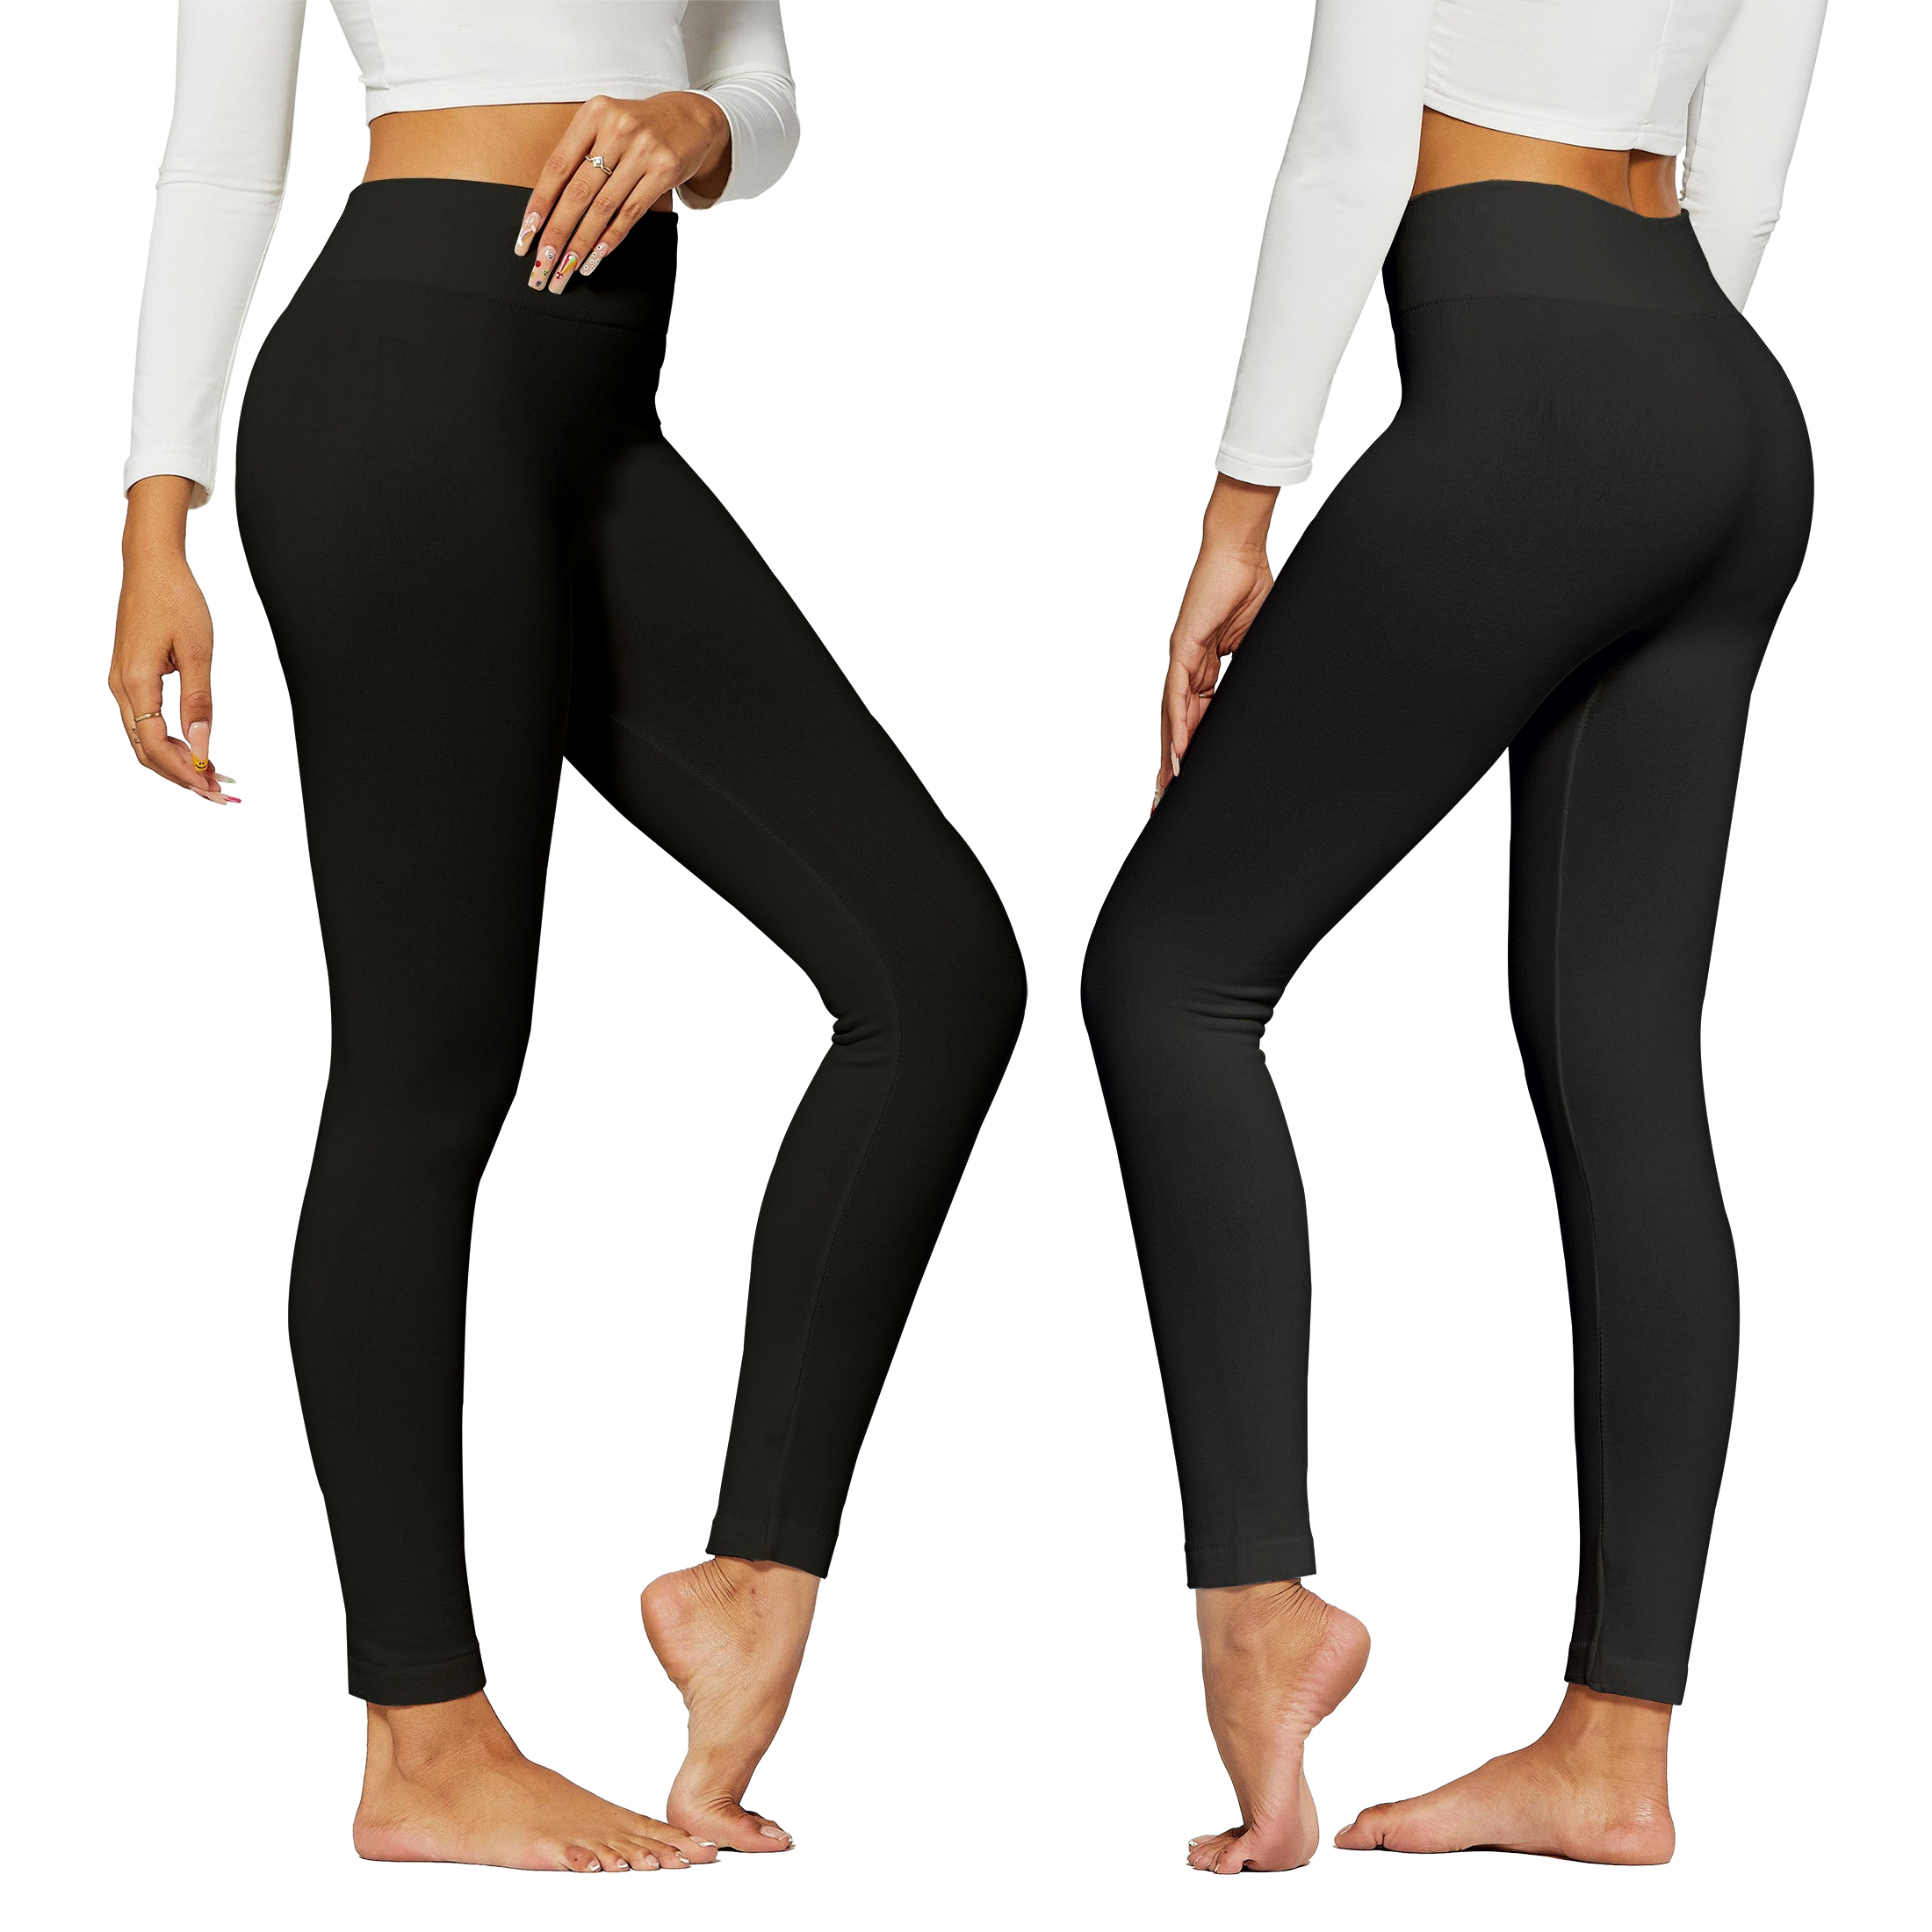 Women's Premium Quality High-Waist Fleece Lined Leggings (S-4X) - Black, Large/X-Large